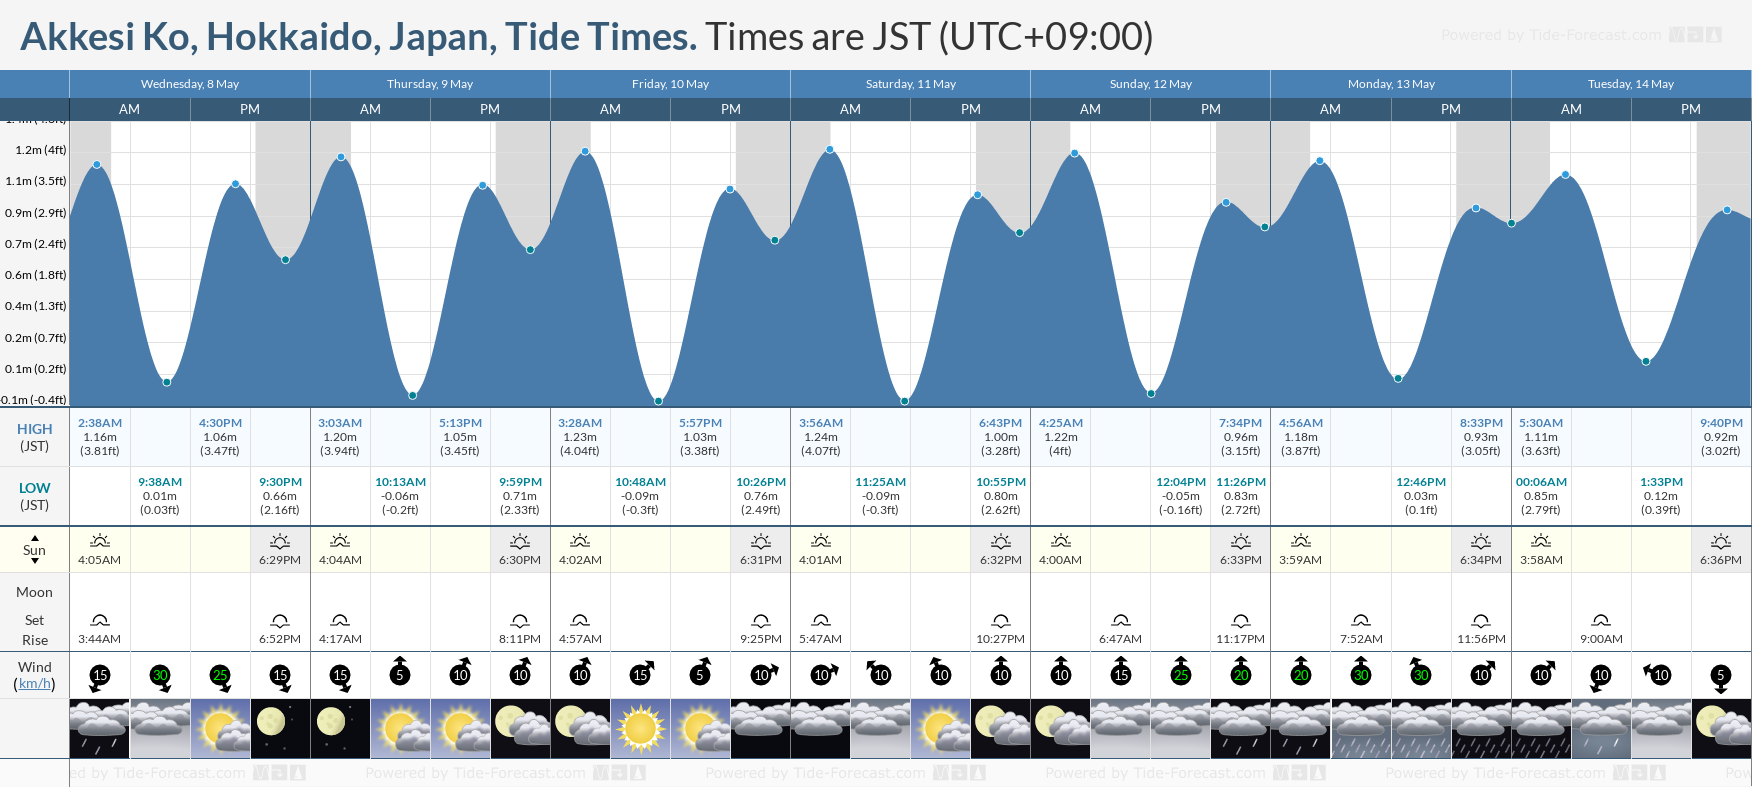 Akkesi Ko, Hokkaido, Japan Tide Chart including high and low tide tide times for the next 7 days